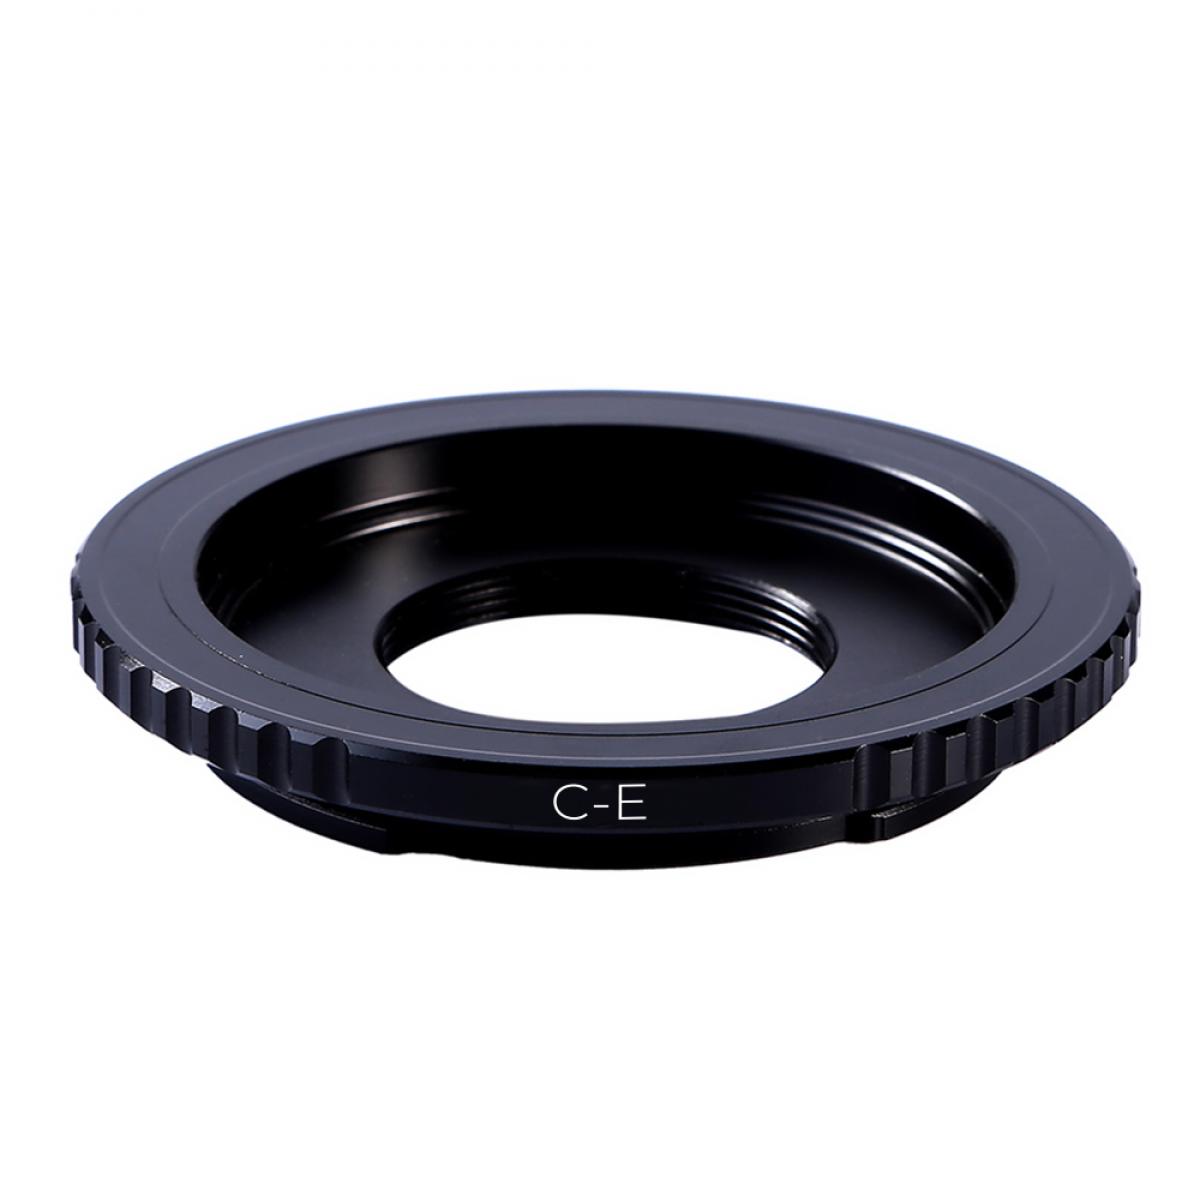 C Mount Lenses to Sony E Lens Mount Adapter K&F Concept M25101 Lens Adapter